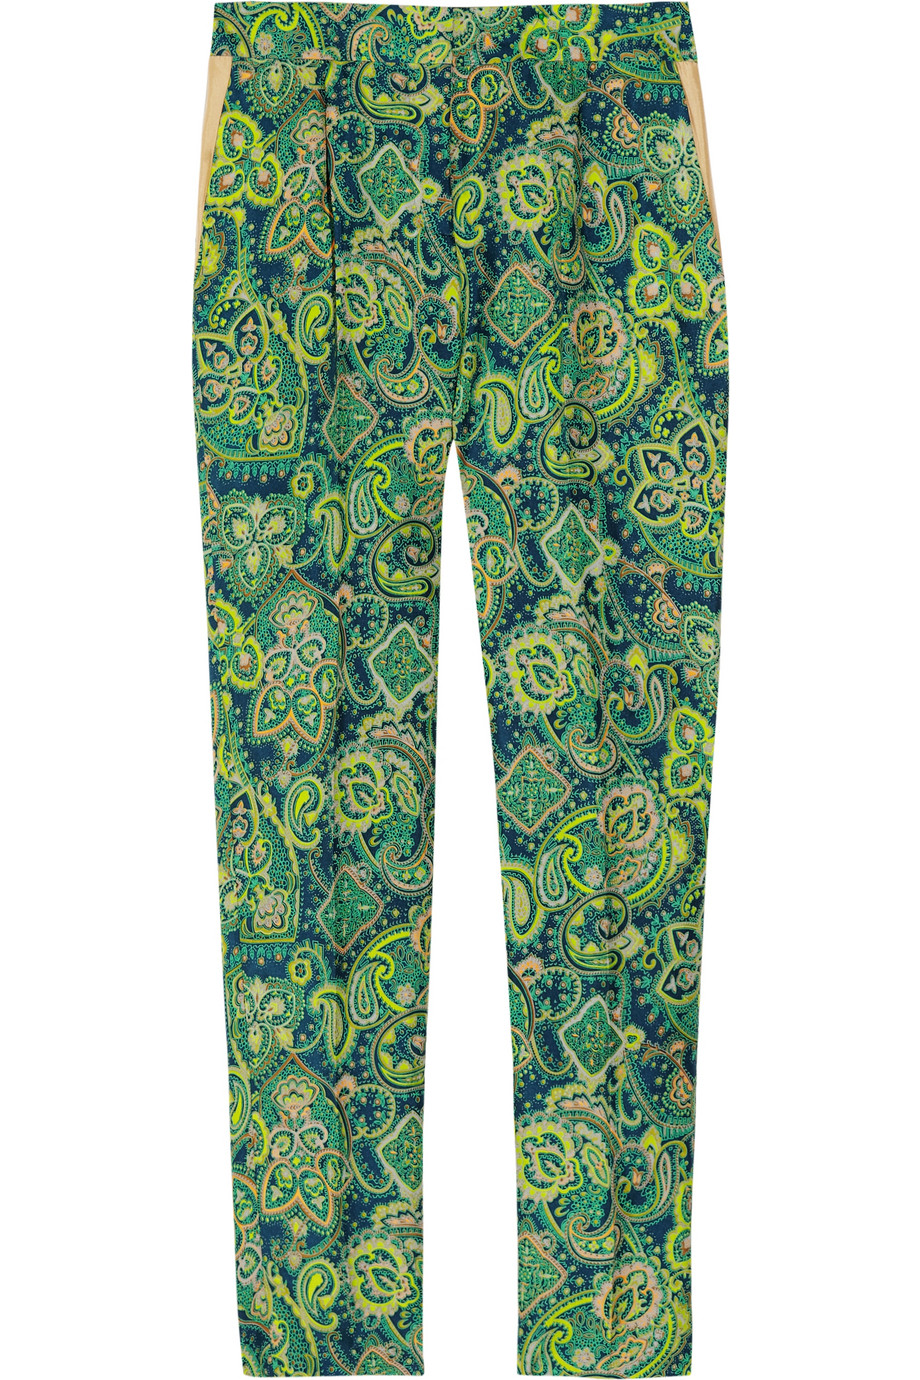 Lyst - By Malene Birger Printed Silk Twill Pants in Green